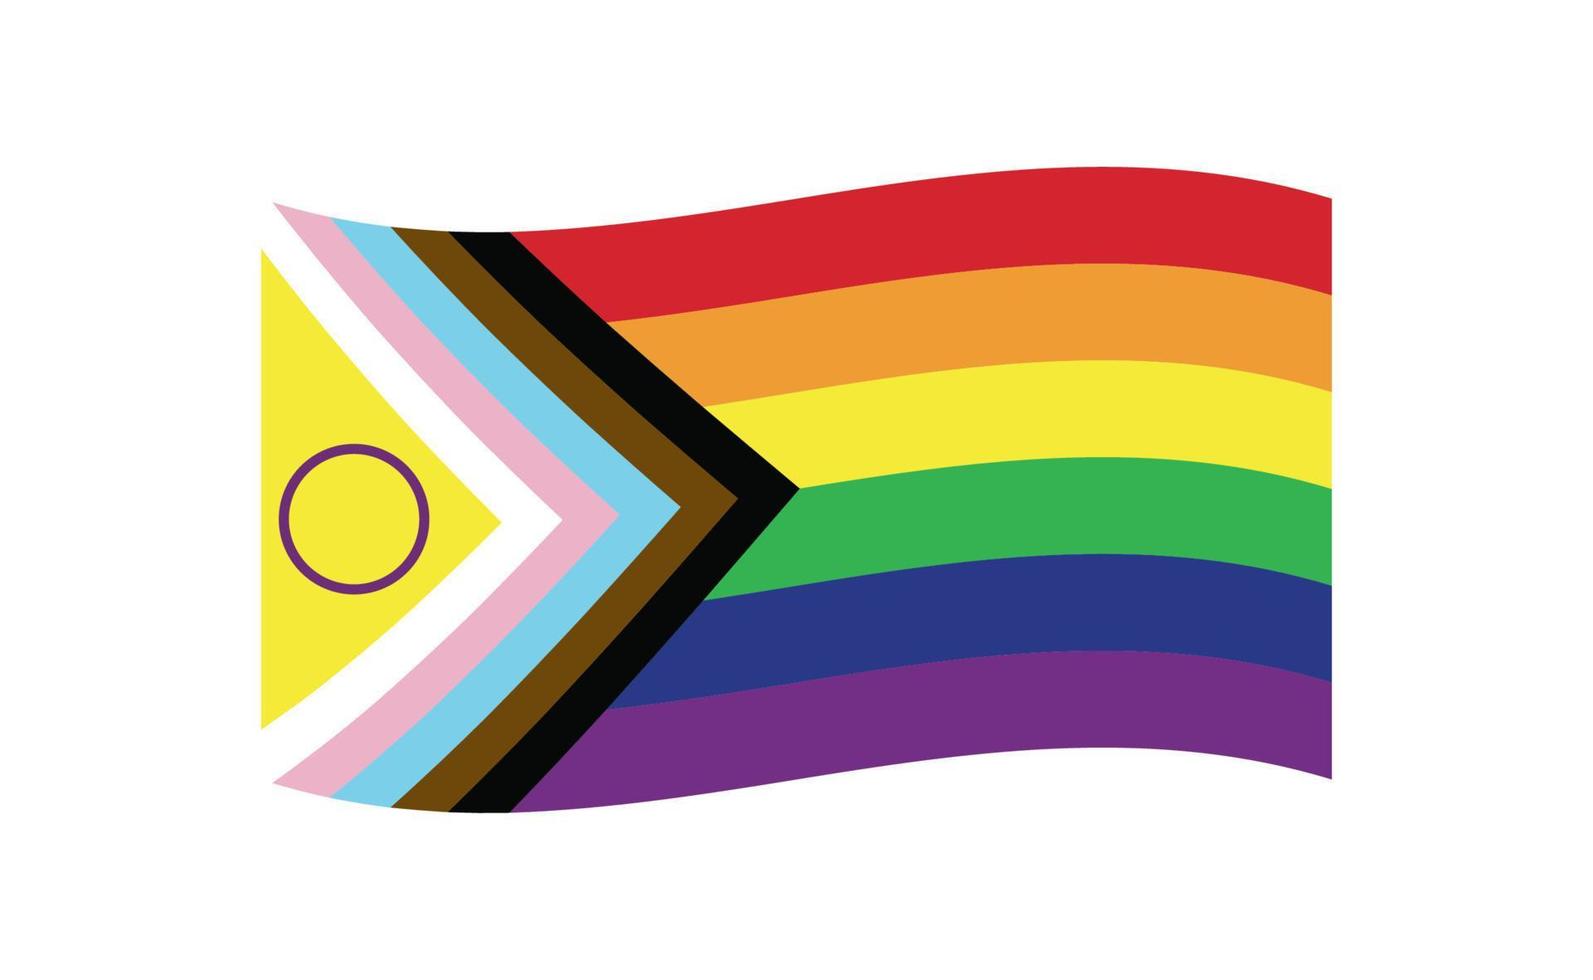 New Updated LGBTQ Pride Flag Vector. Intersex Inclusive Progress Pride Flag. Banner Flag for LGBT, or LGBTQIA Pride. vector